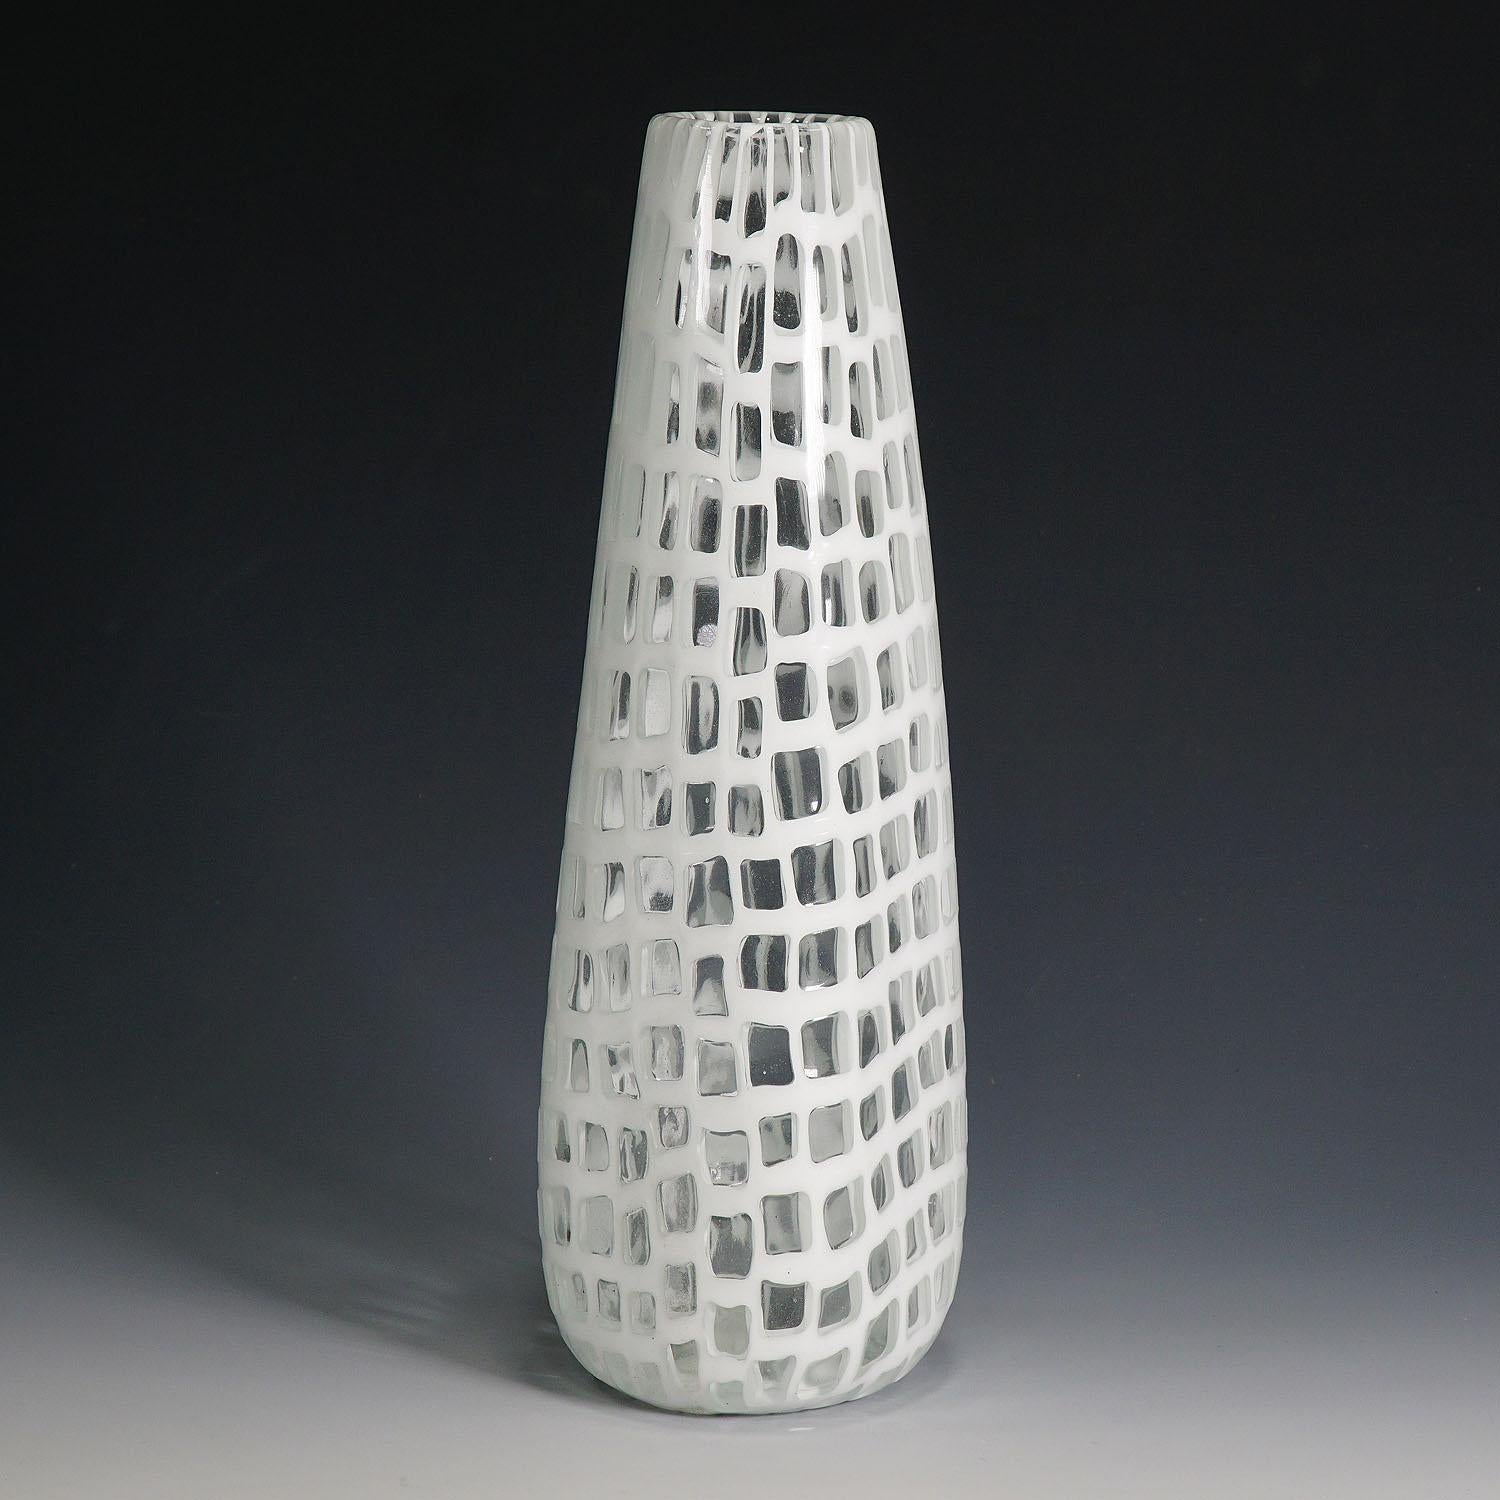 A white 'occhi' murrine vase designed by Tobia Scarpa in 1960, manufactured by Venini, Venice ca. 1970. Etched signature 'venini italia' on the base.

Measures:
Width: 3.94